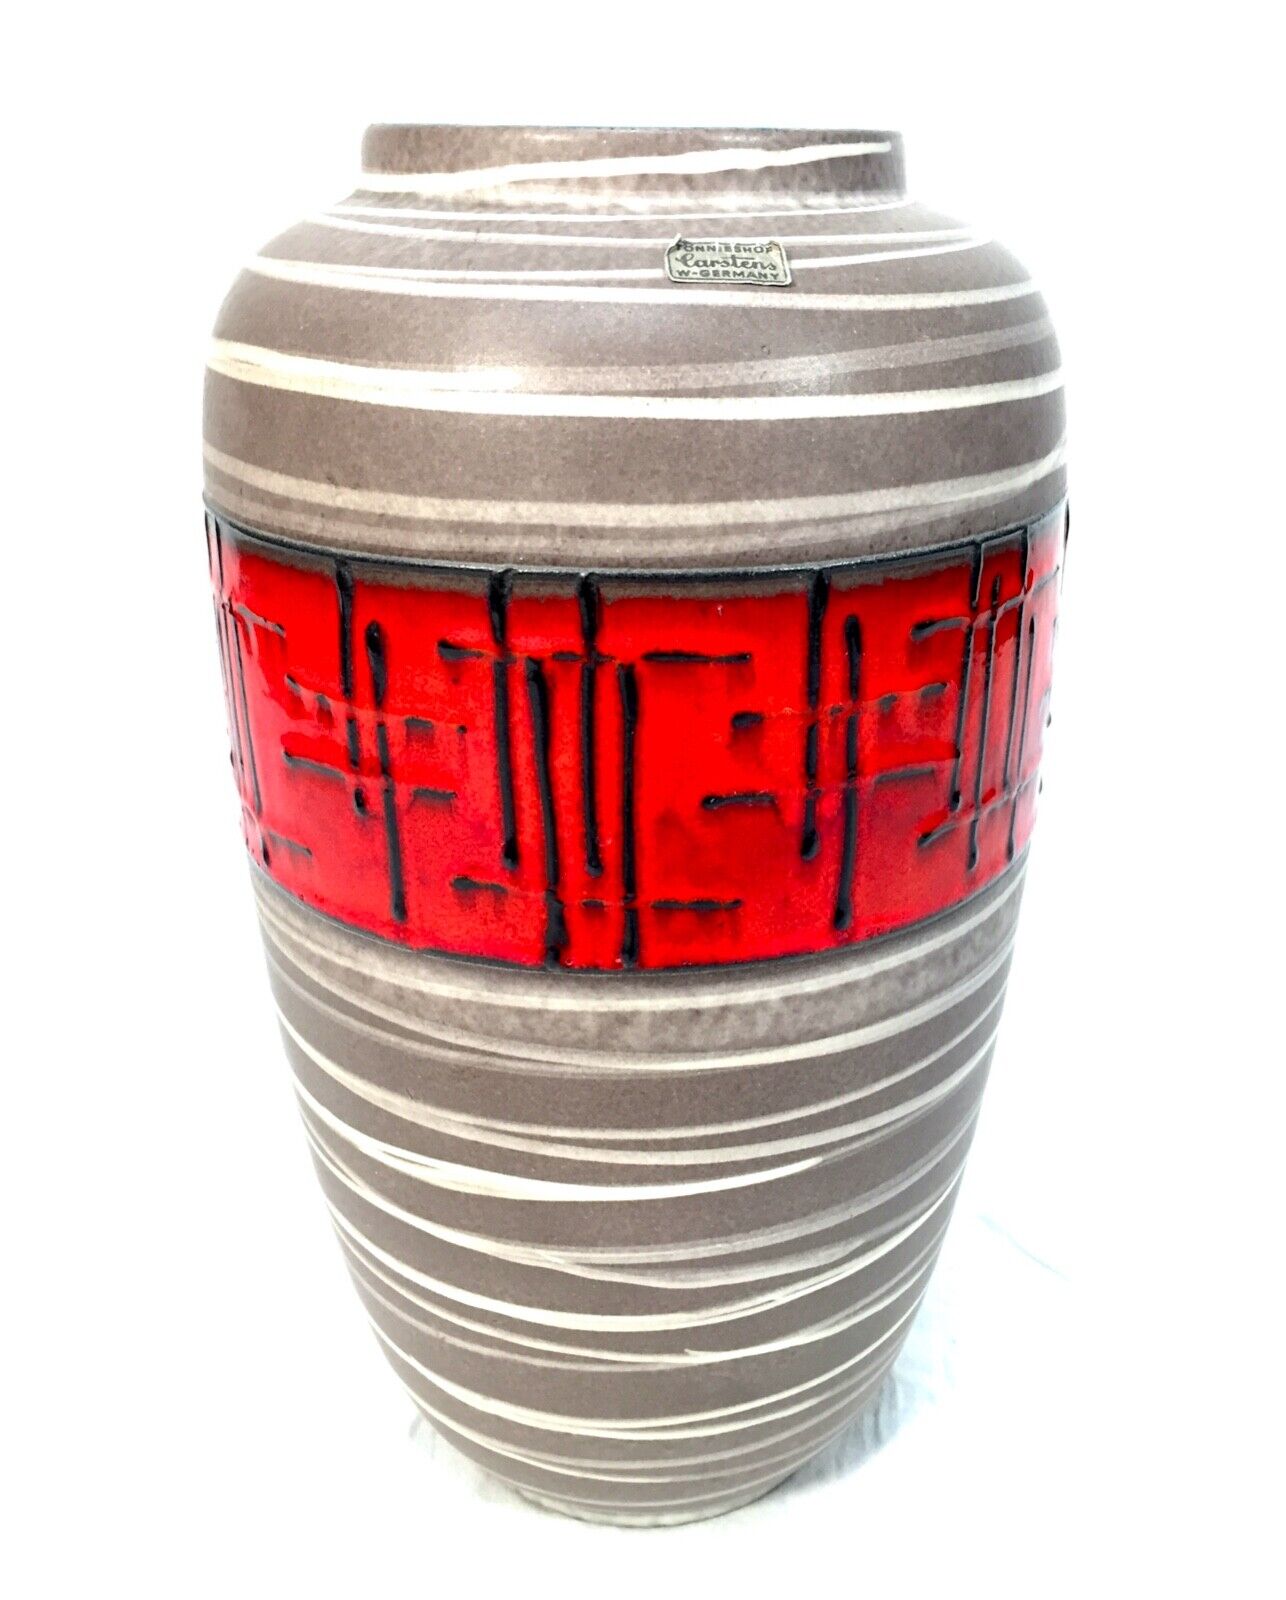 Vintage West German Pottery Large Vase / Jug / Red & Grey / 1970s Retro